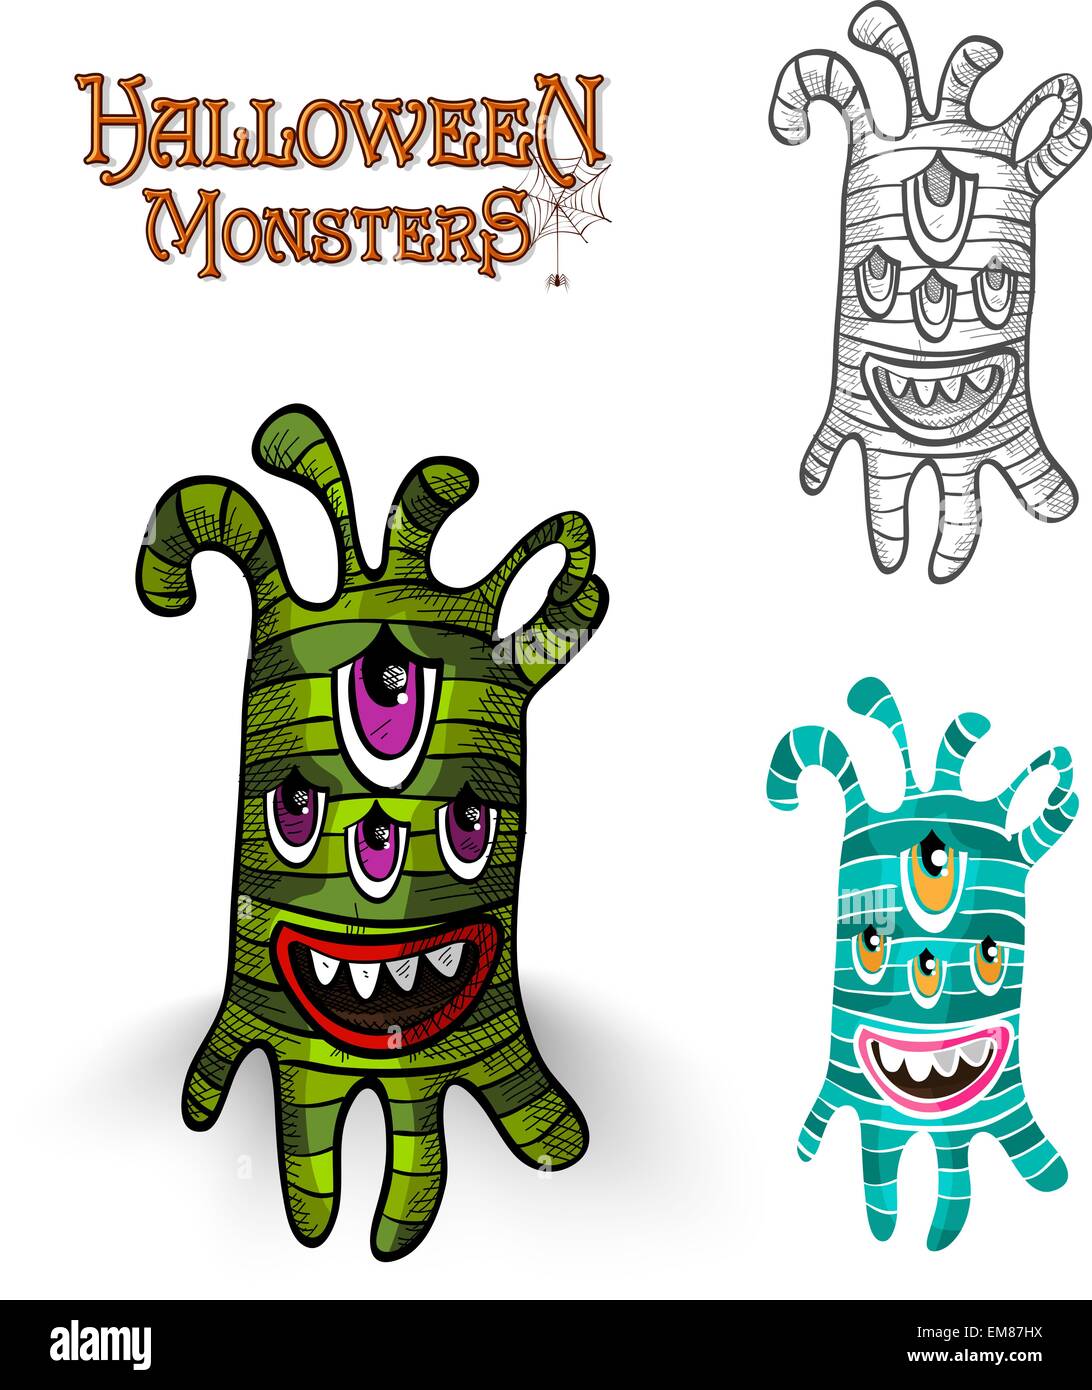 Halloween Monster unheimliche Kreatur Abbildung EPS10 Datei Stock Vektor